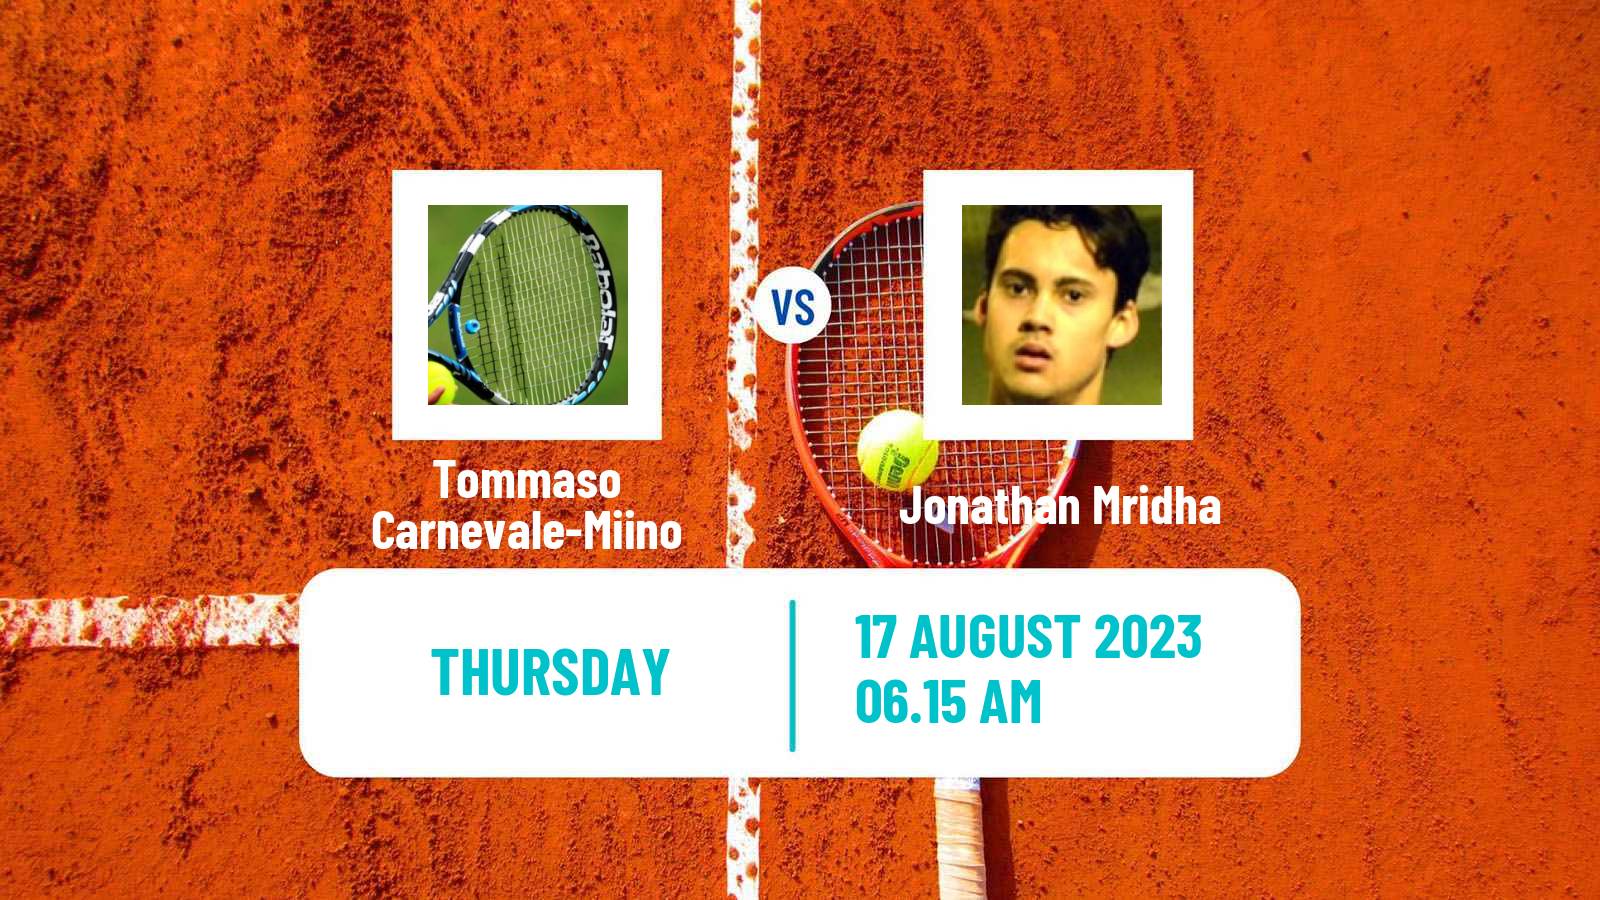 Tennis ITF M25 Ystad Men Tommaso Carnevale-Miino - Jonathan Mridha